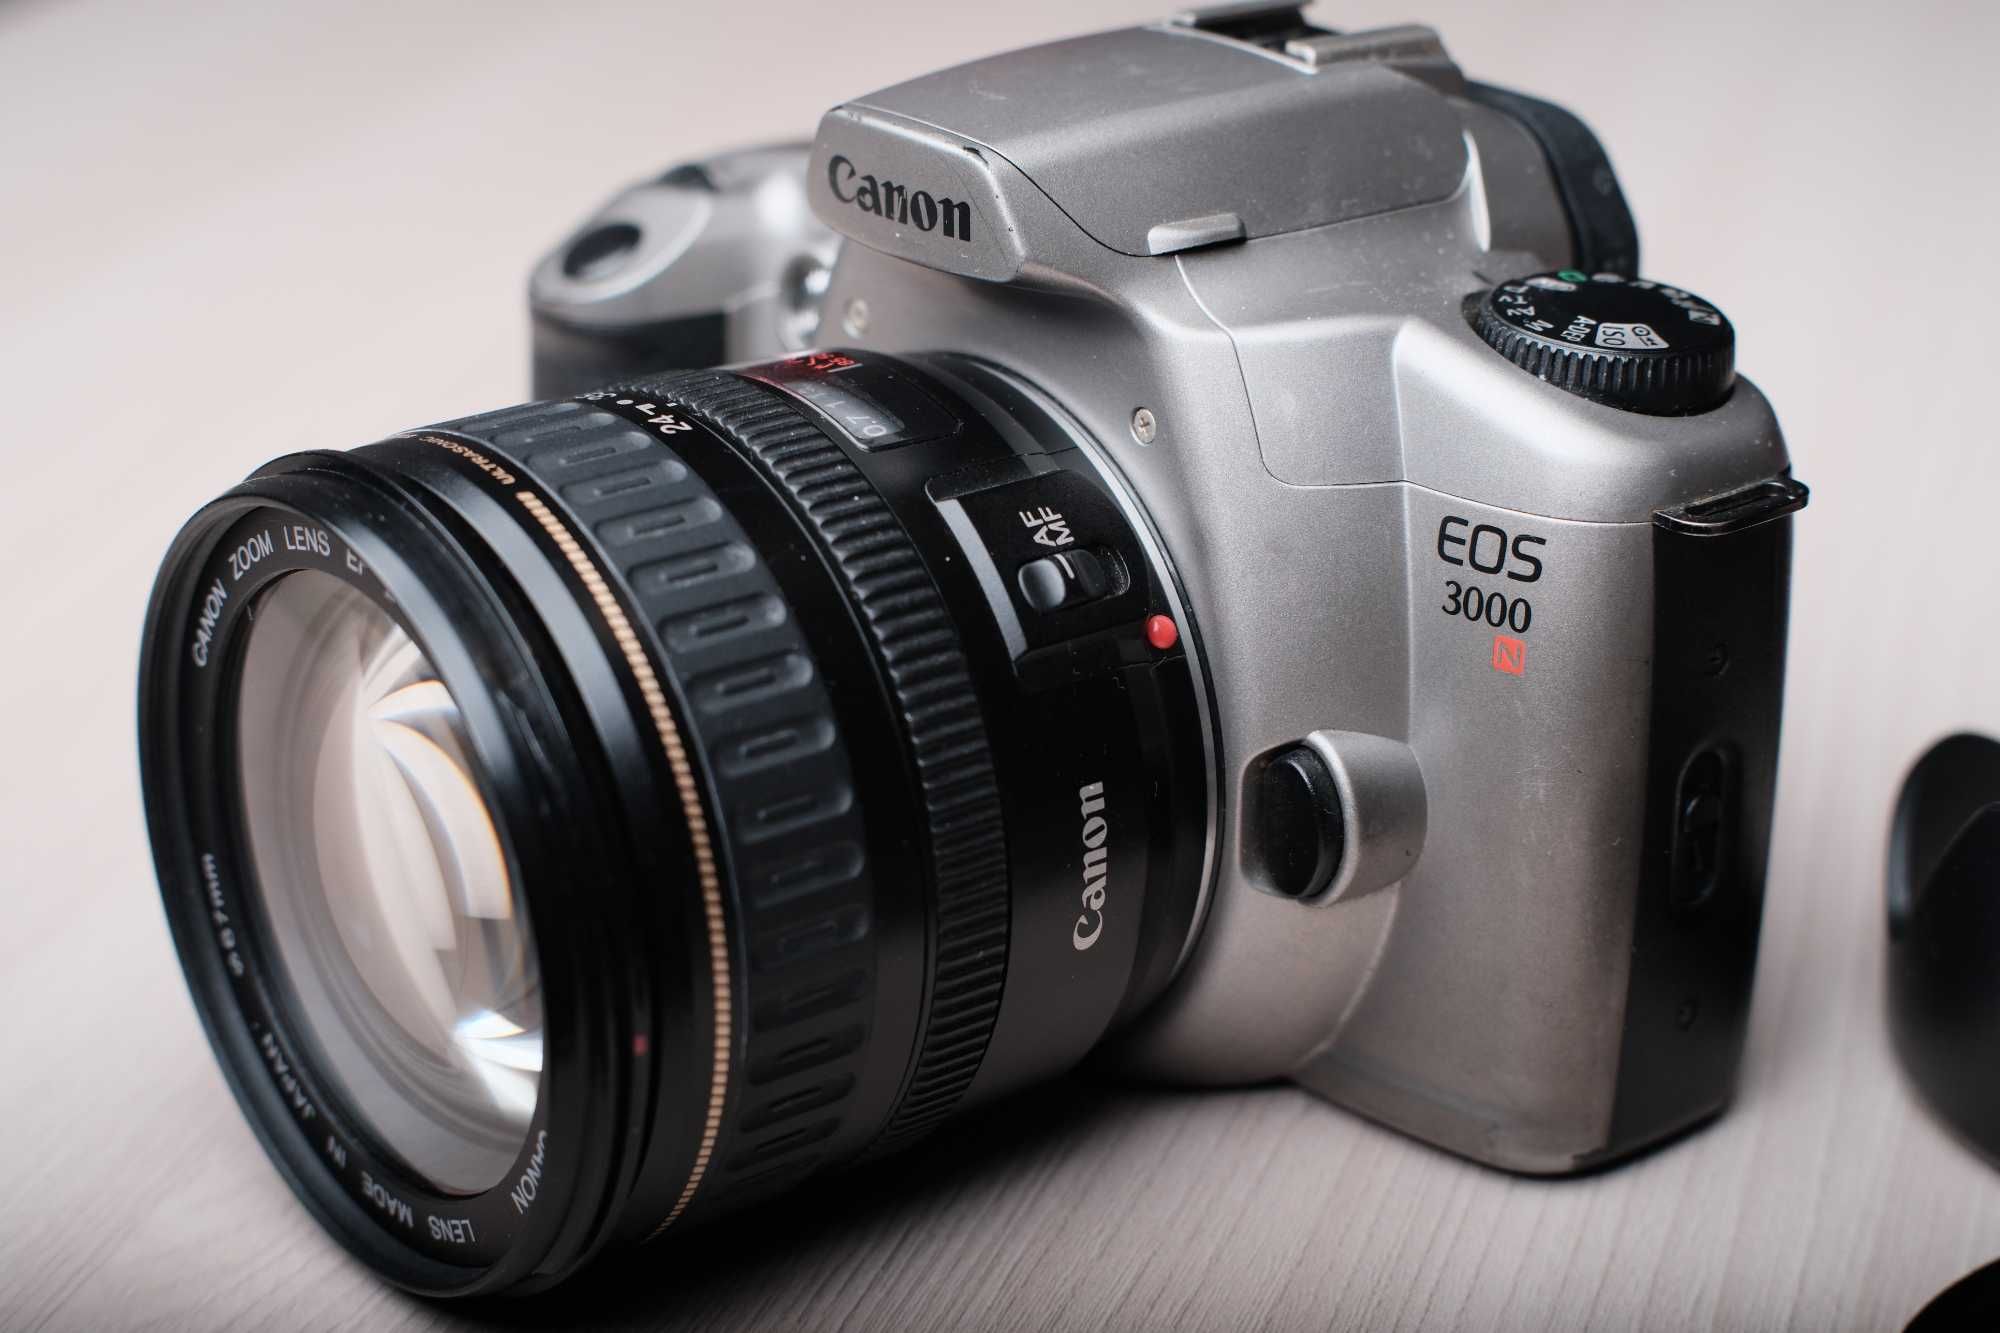 Canon EF 24-85mm f/3.5-4.5 USM. Full frame, полнокадровый